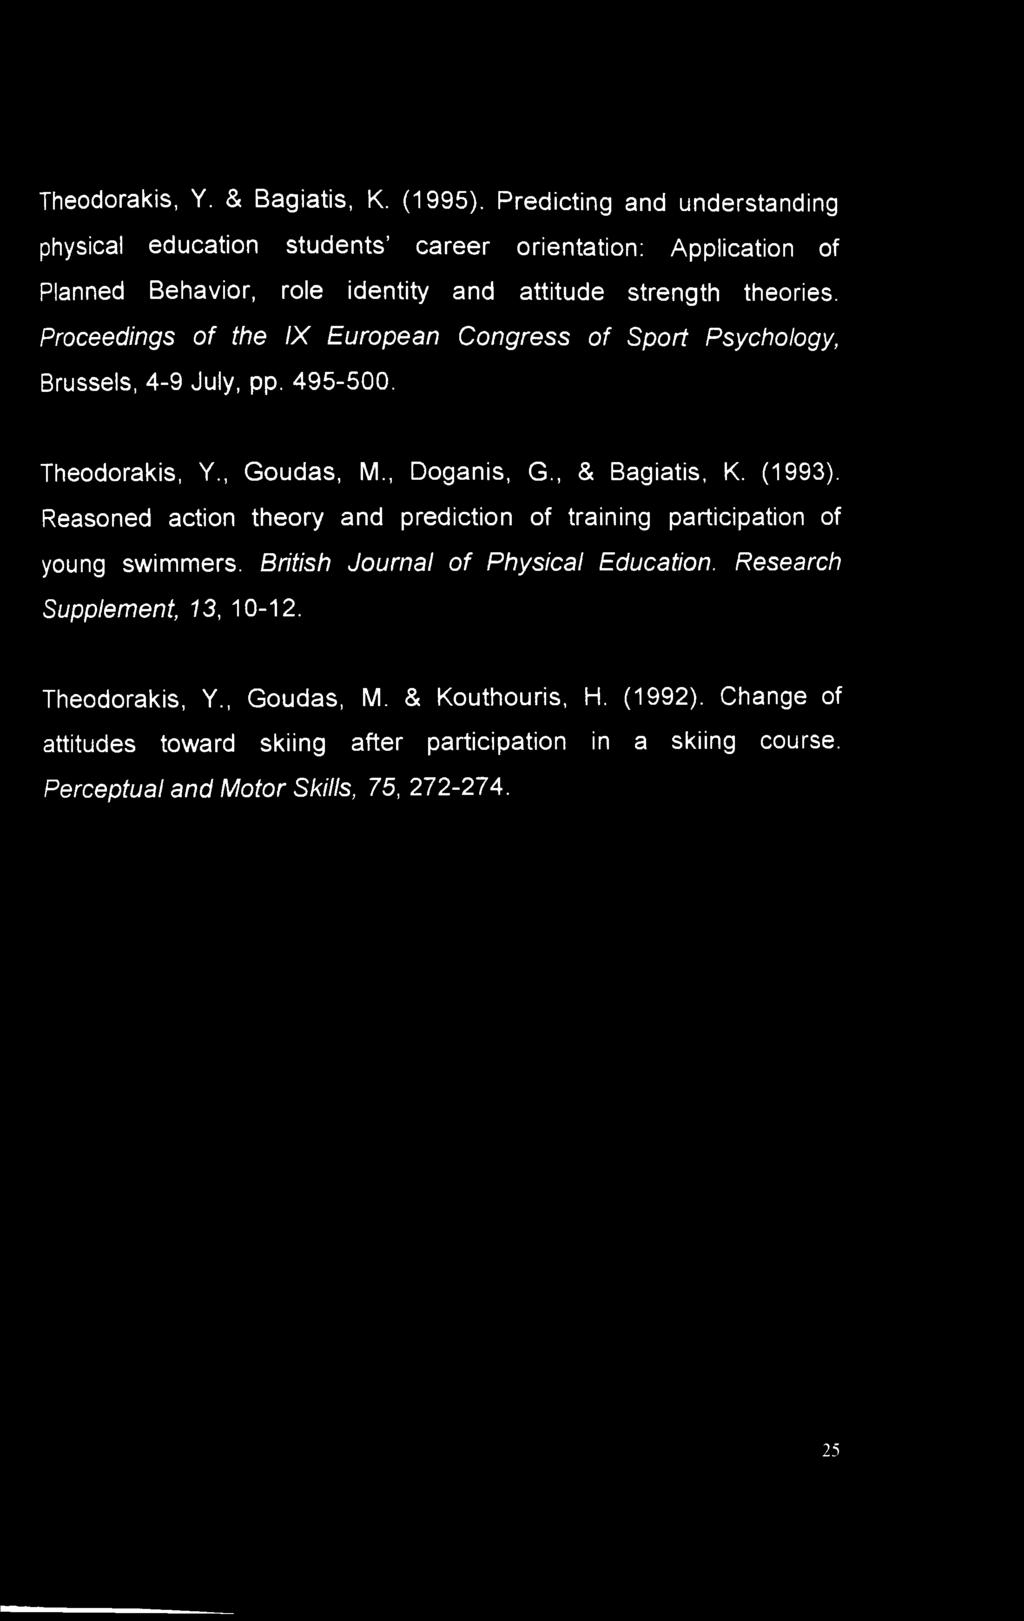 Proceedings of the IX European Congress of Sport Psychology, Brussels, 4-9 July, pp. 495-500. Theodorakis, Y., Goudas, M., Doganis, G., & Bagiatis, K. (1993).